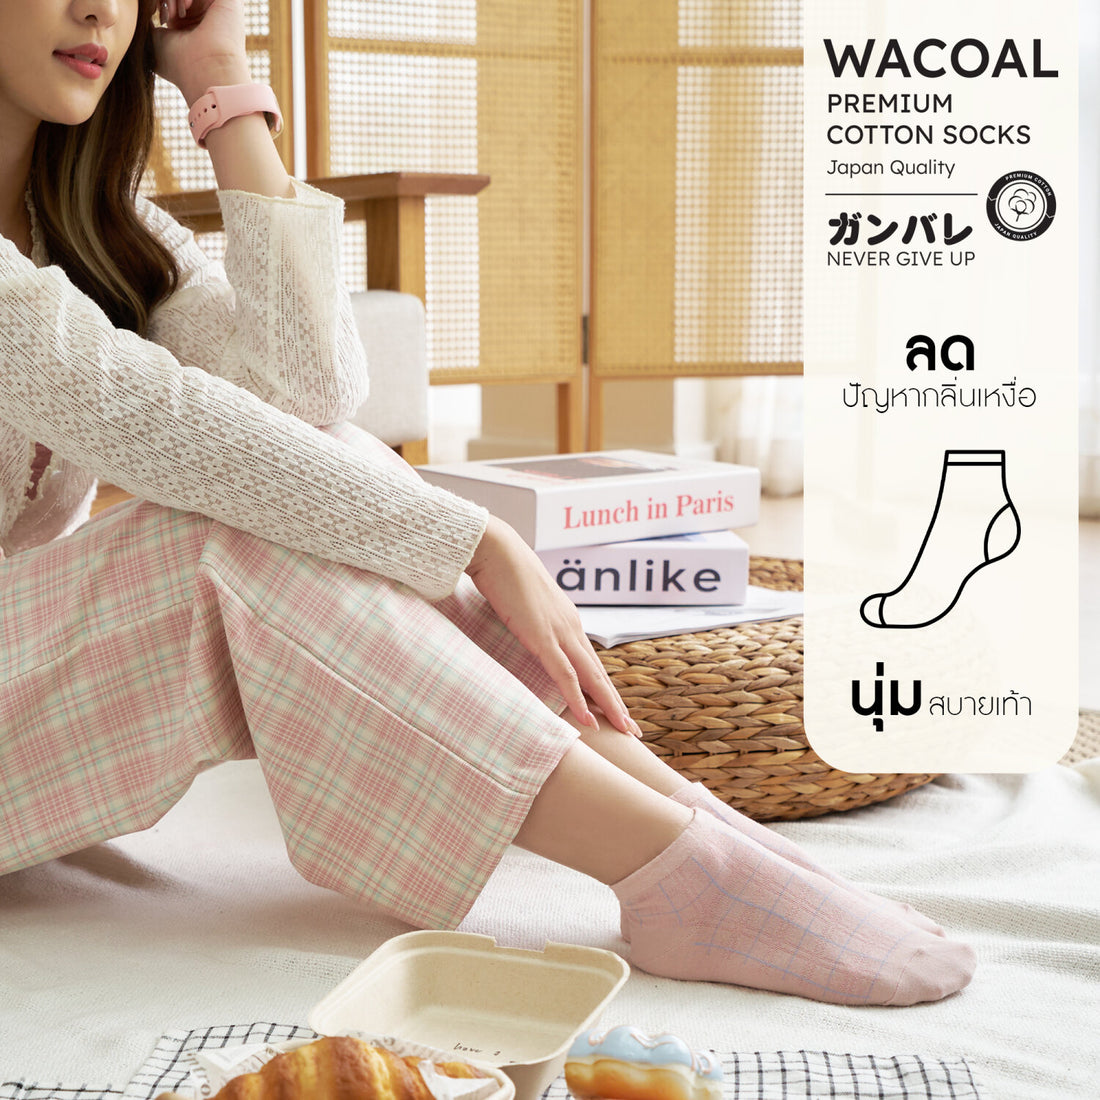 Short Socks Premium Cotton Socks Selected by Wacoal model WW110300 Ovaltine (OT)